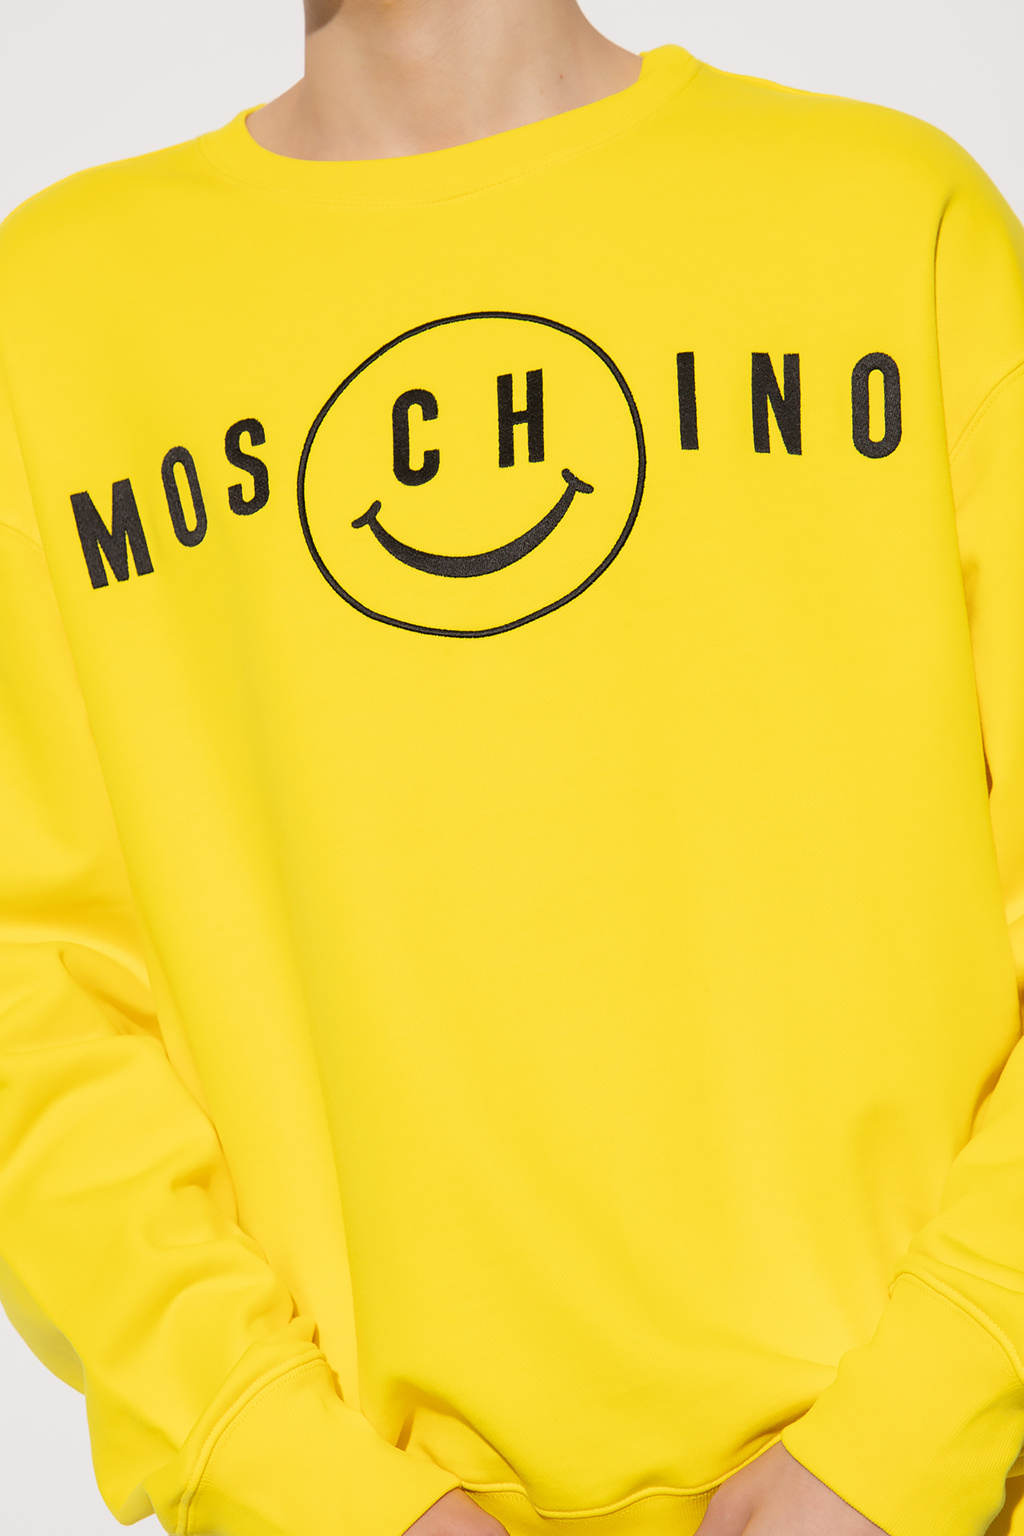 Moschino Compact Striped Shirt